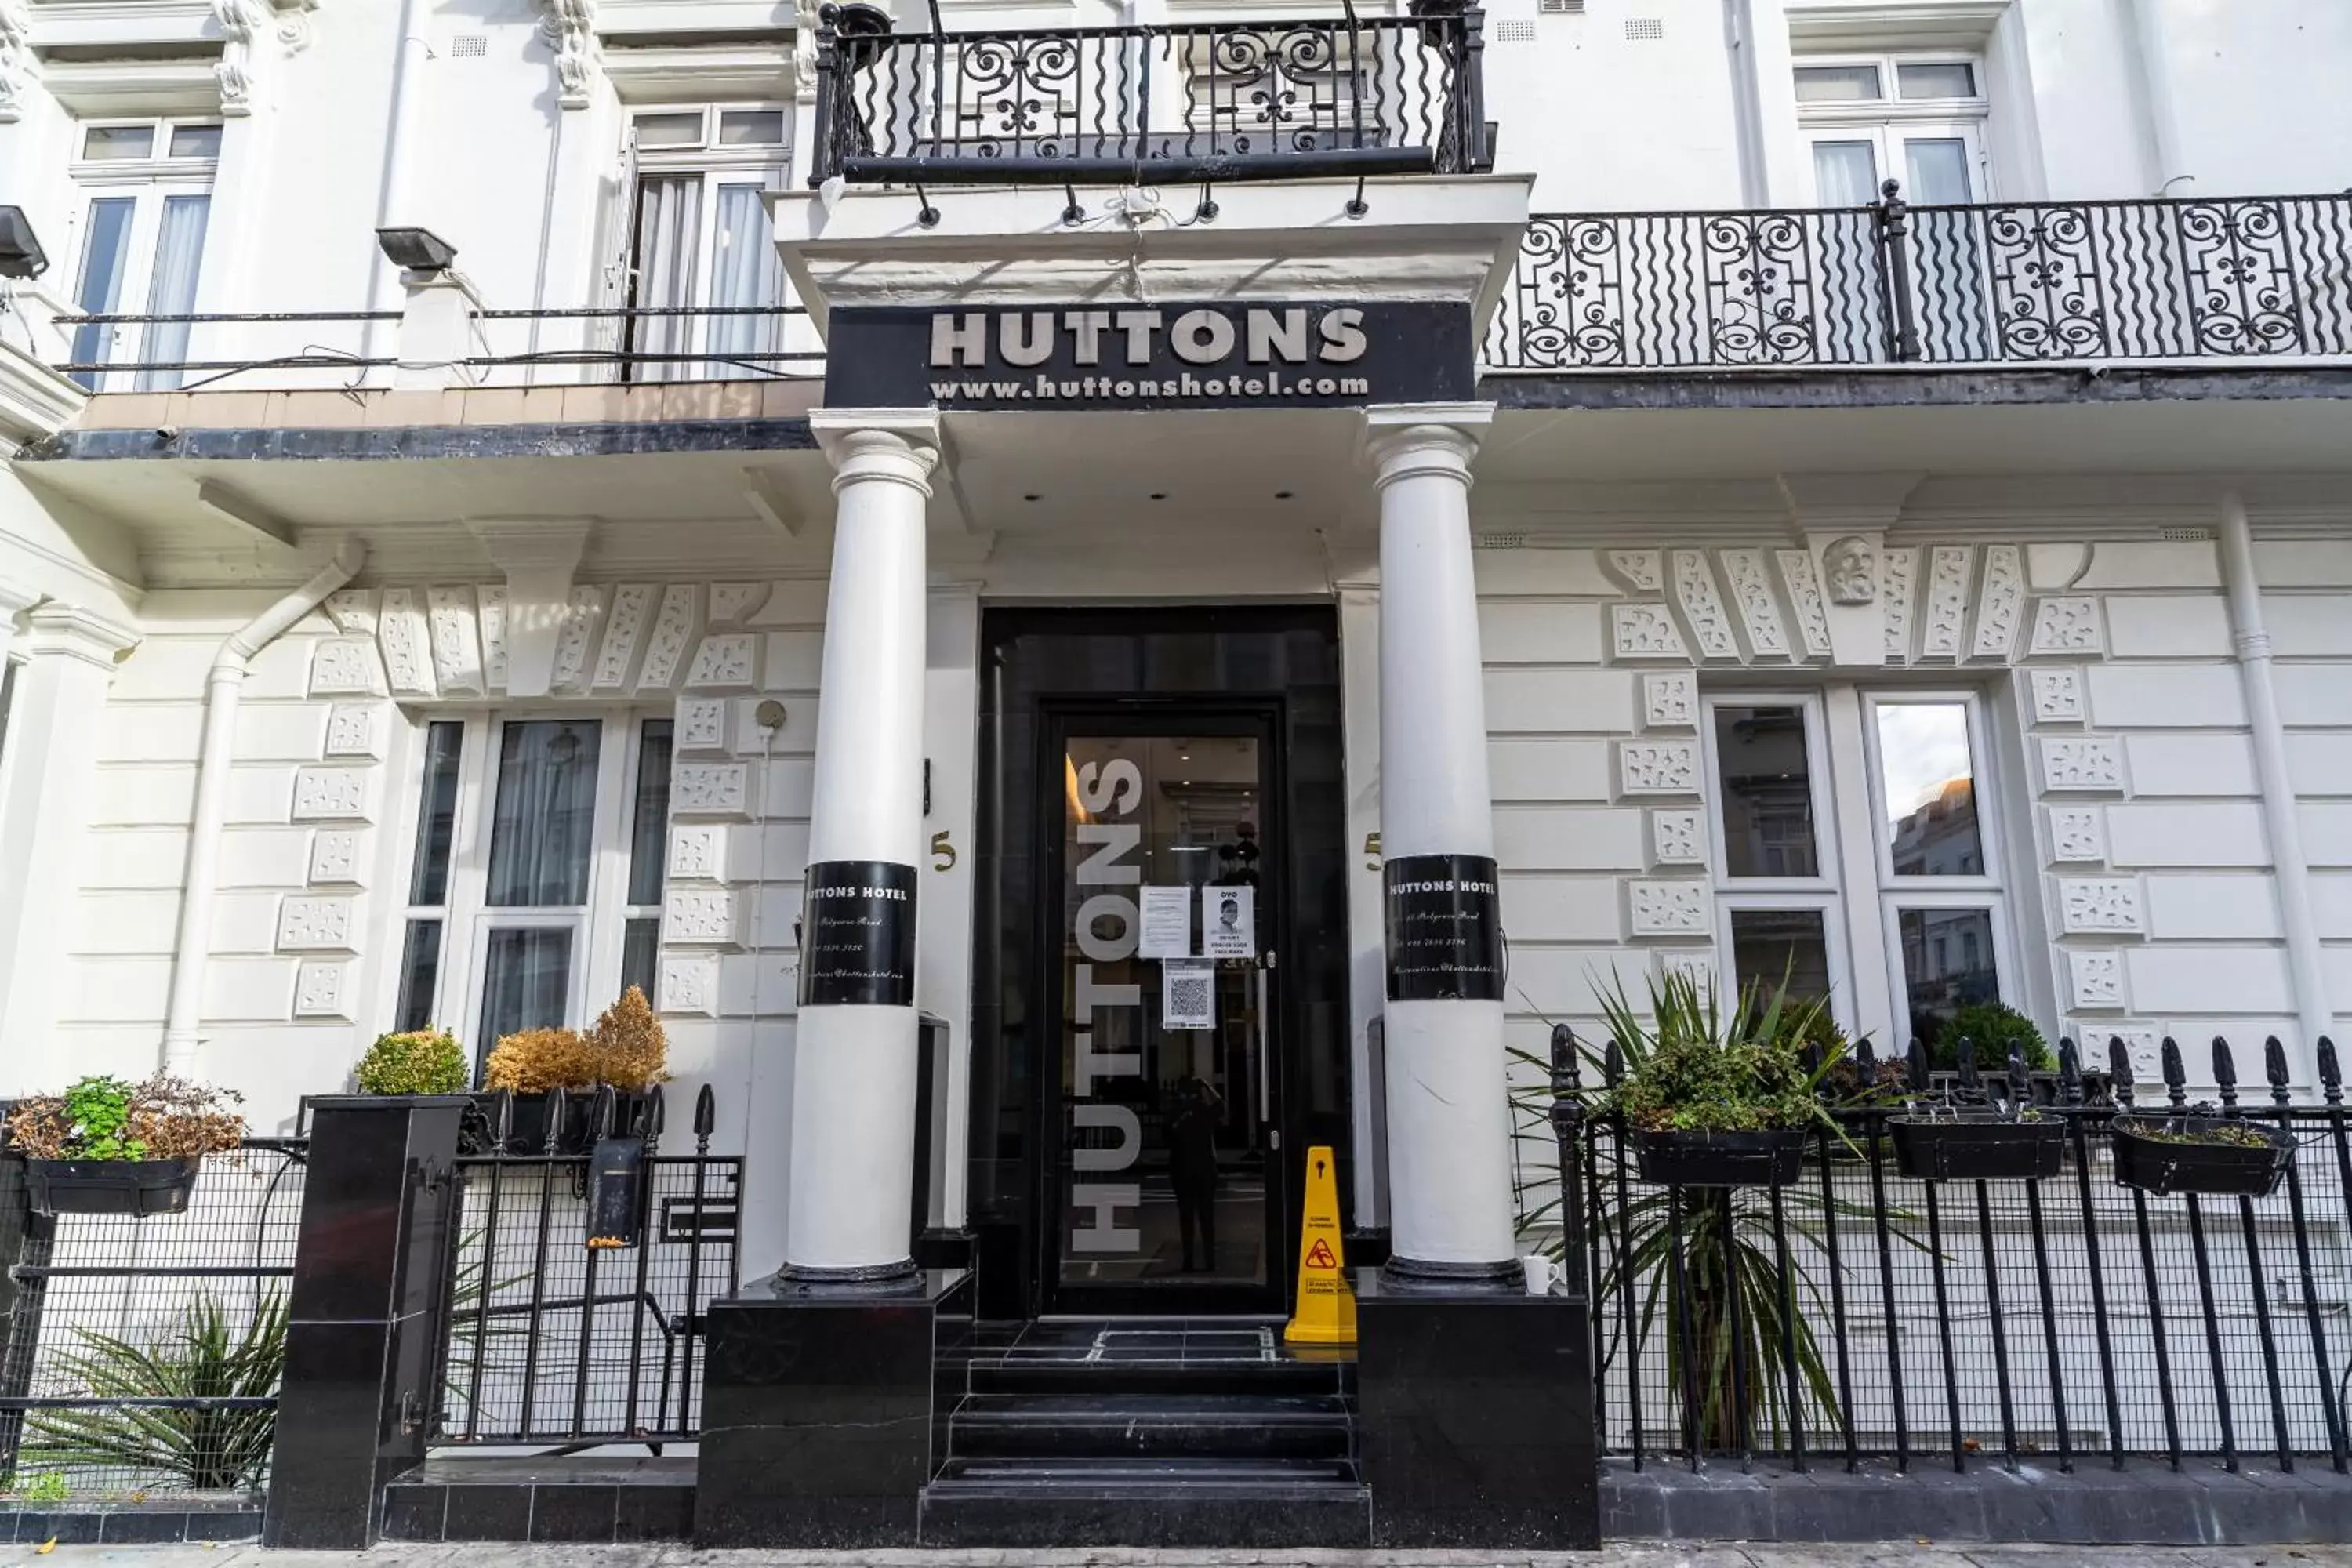 Facade/entrance in Huttons Hotel, Victoria London